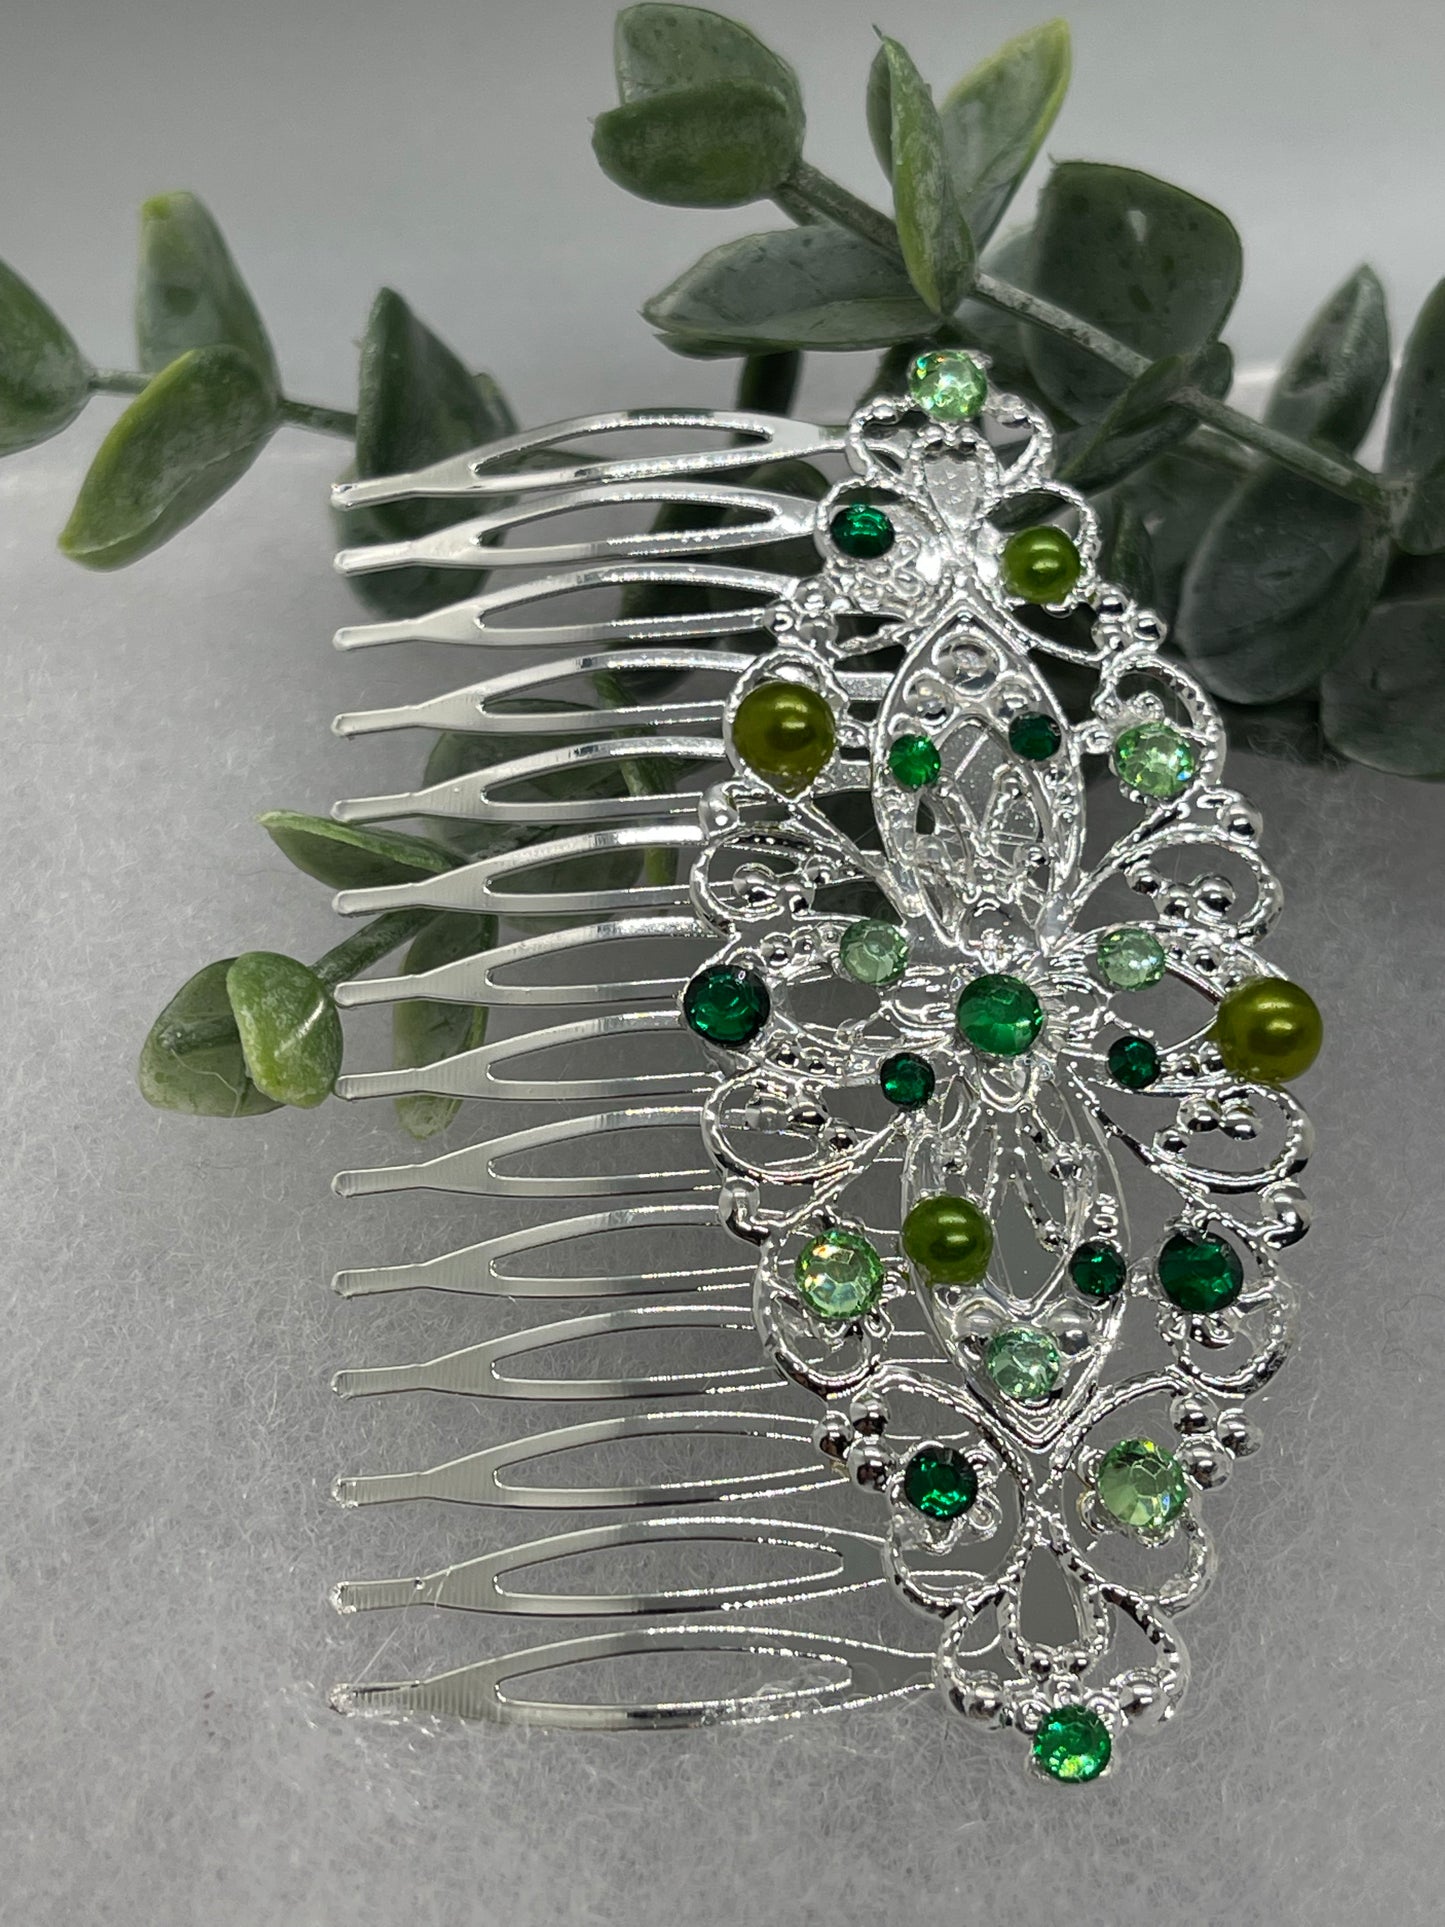 Green crystal rhinestone 3.5” silver side comb Antique vintage style bridal Wedding shower sweet 16 birthday princess bridesmaid hair accessory